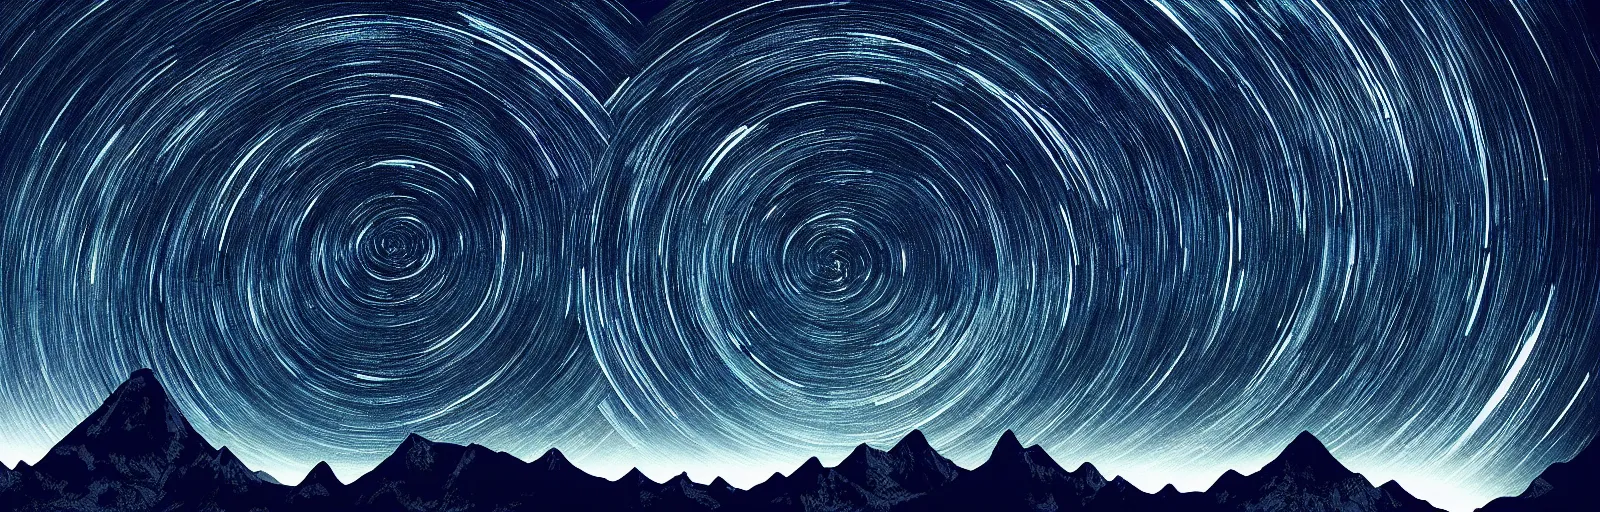 Prompt: Really long organic david cronenberg rocket train spiraling towering mountain starry moonlit night sky, amazing digital art 4k